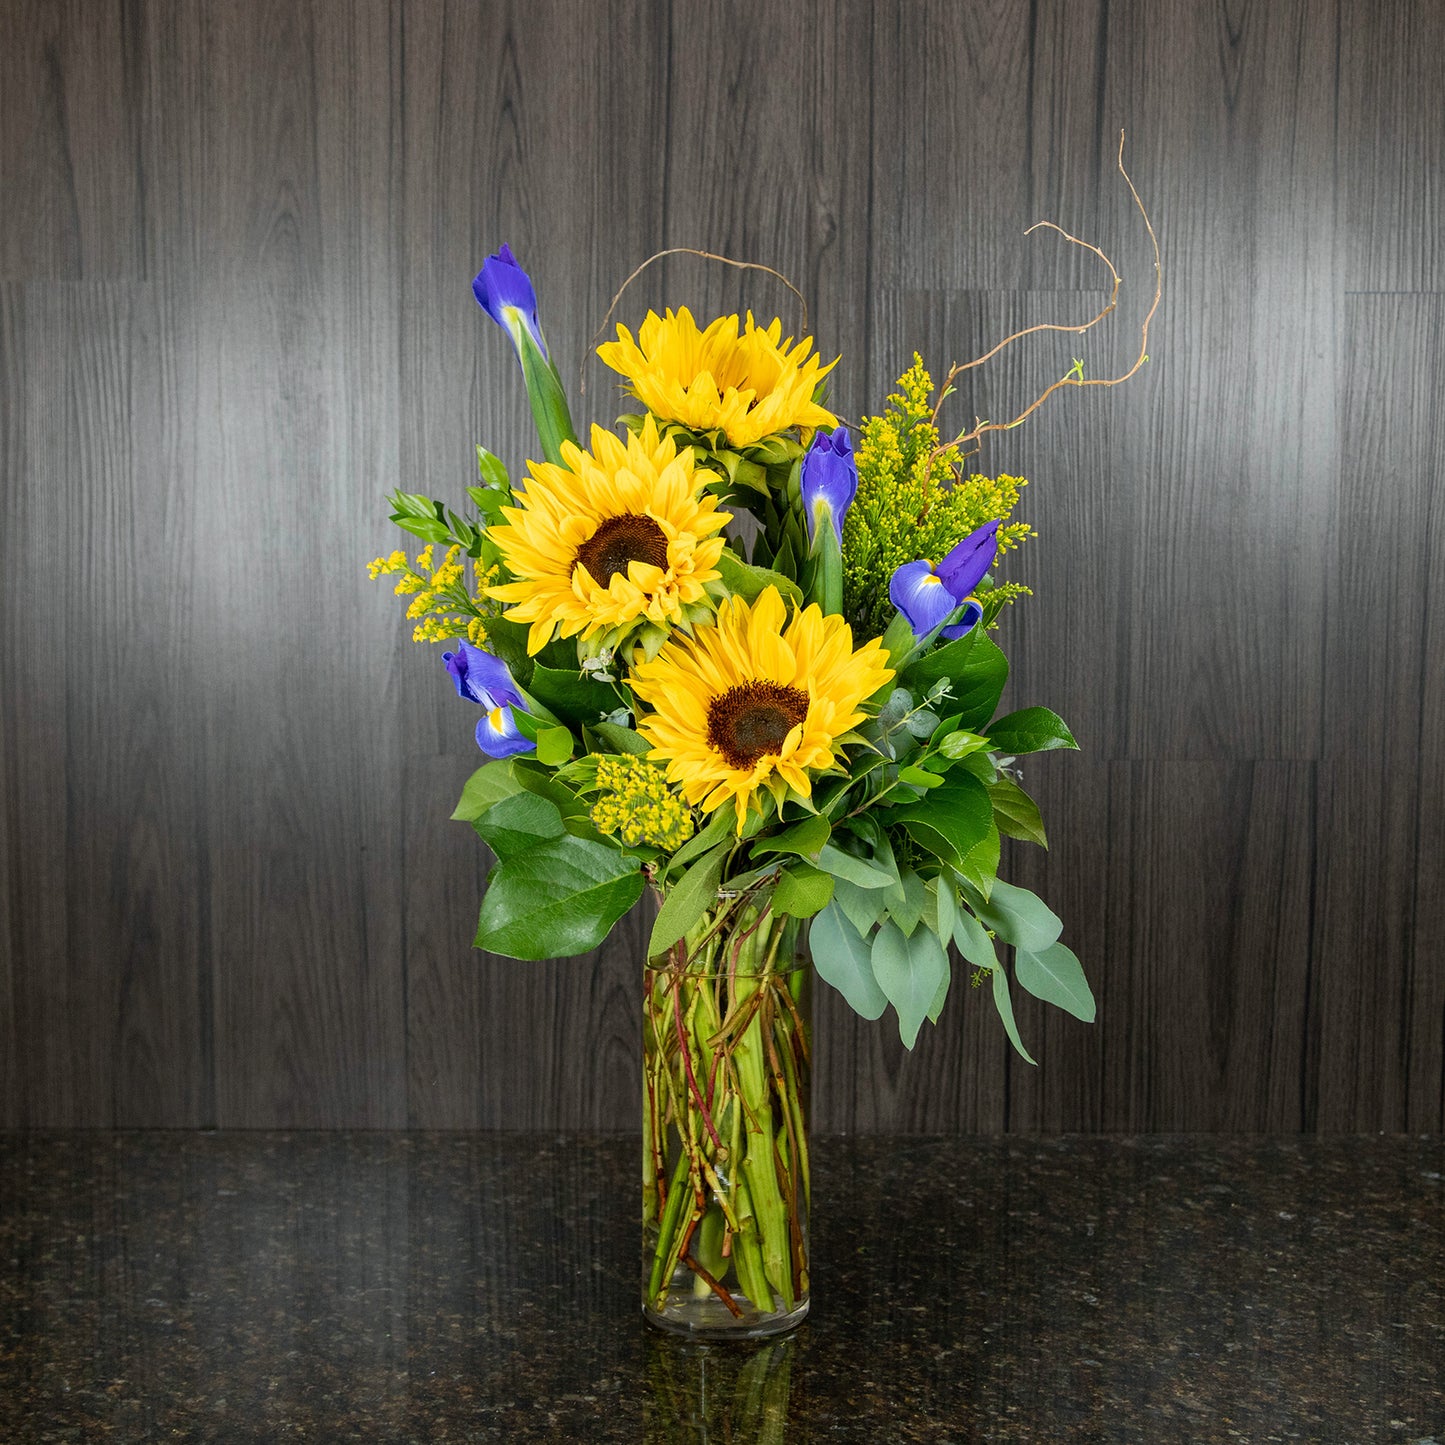 a tall flower arrangement featuring yellow sunflowers and blue irises